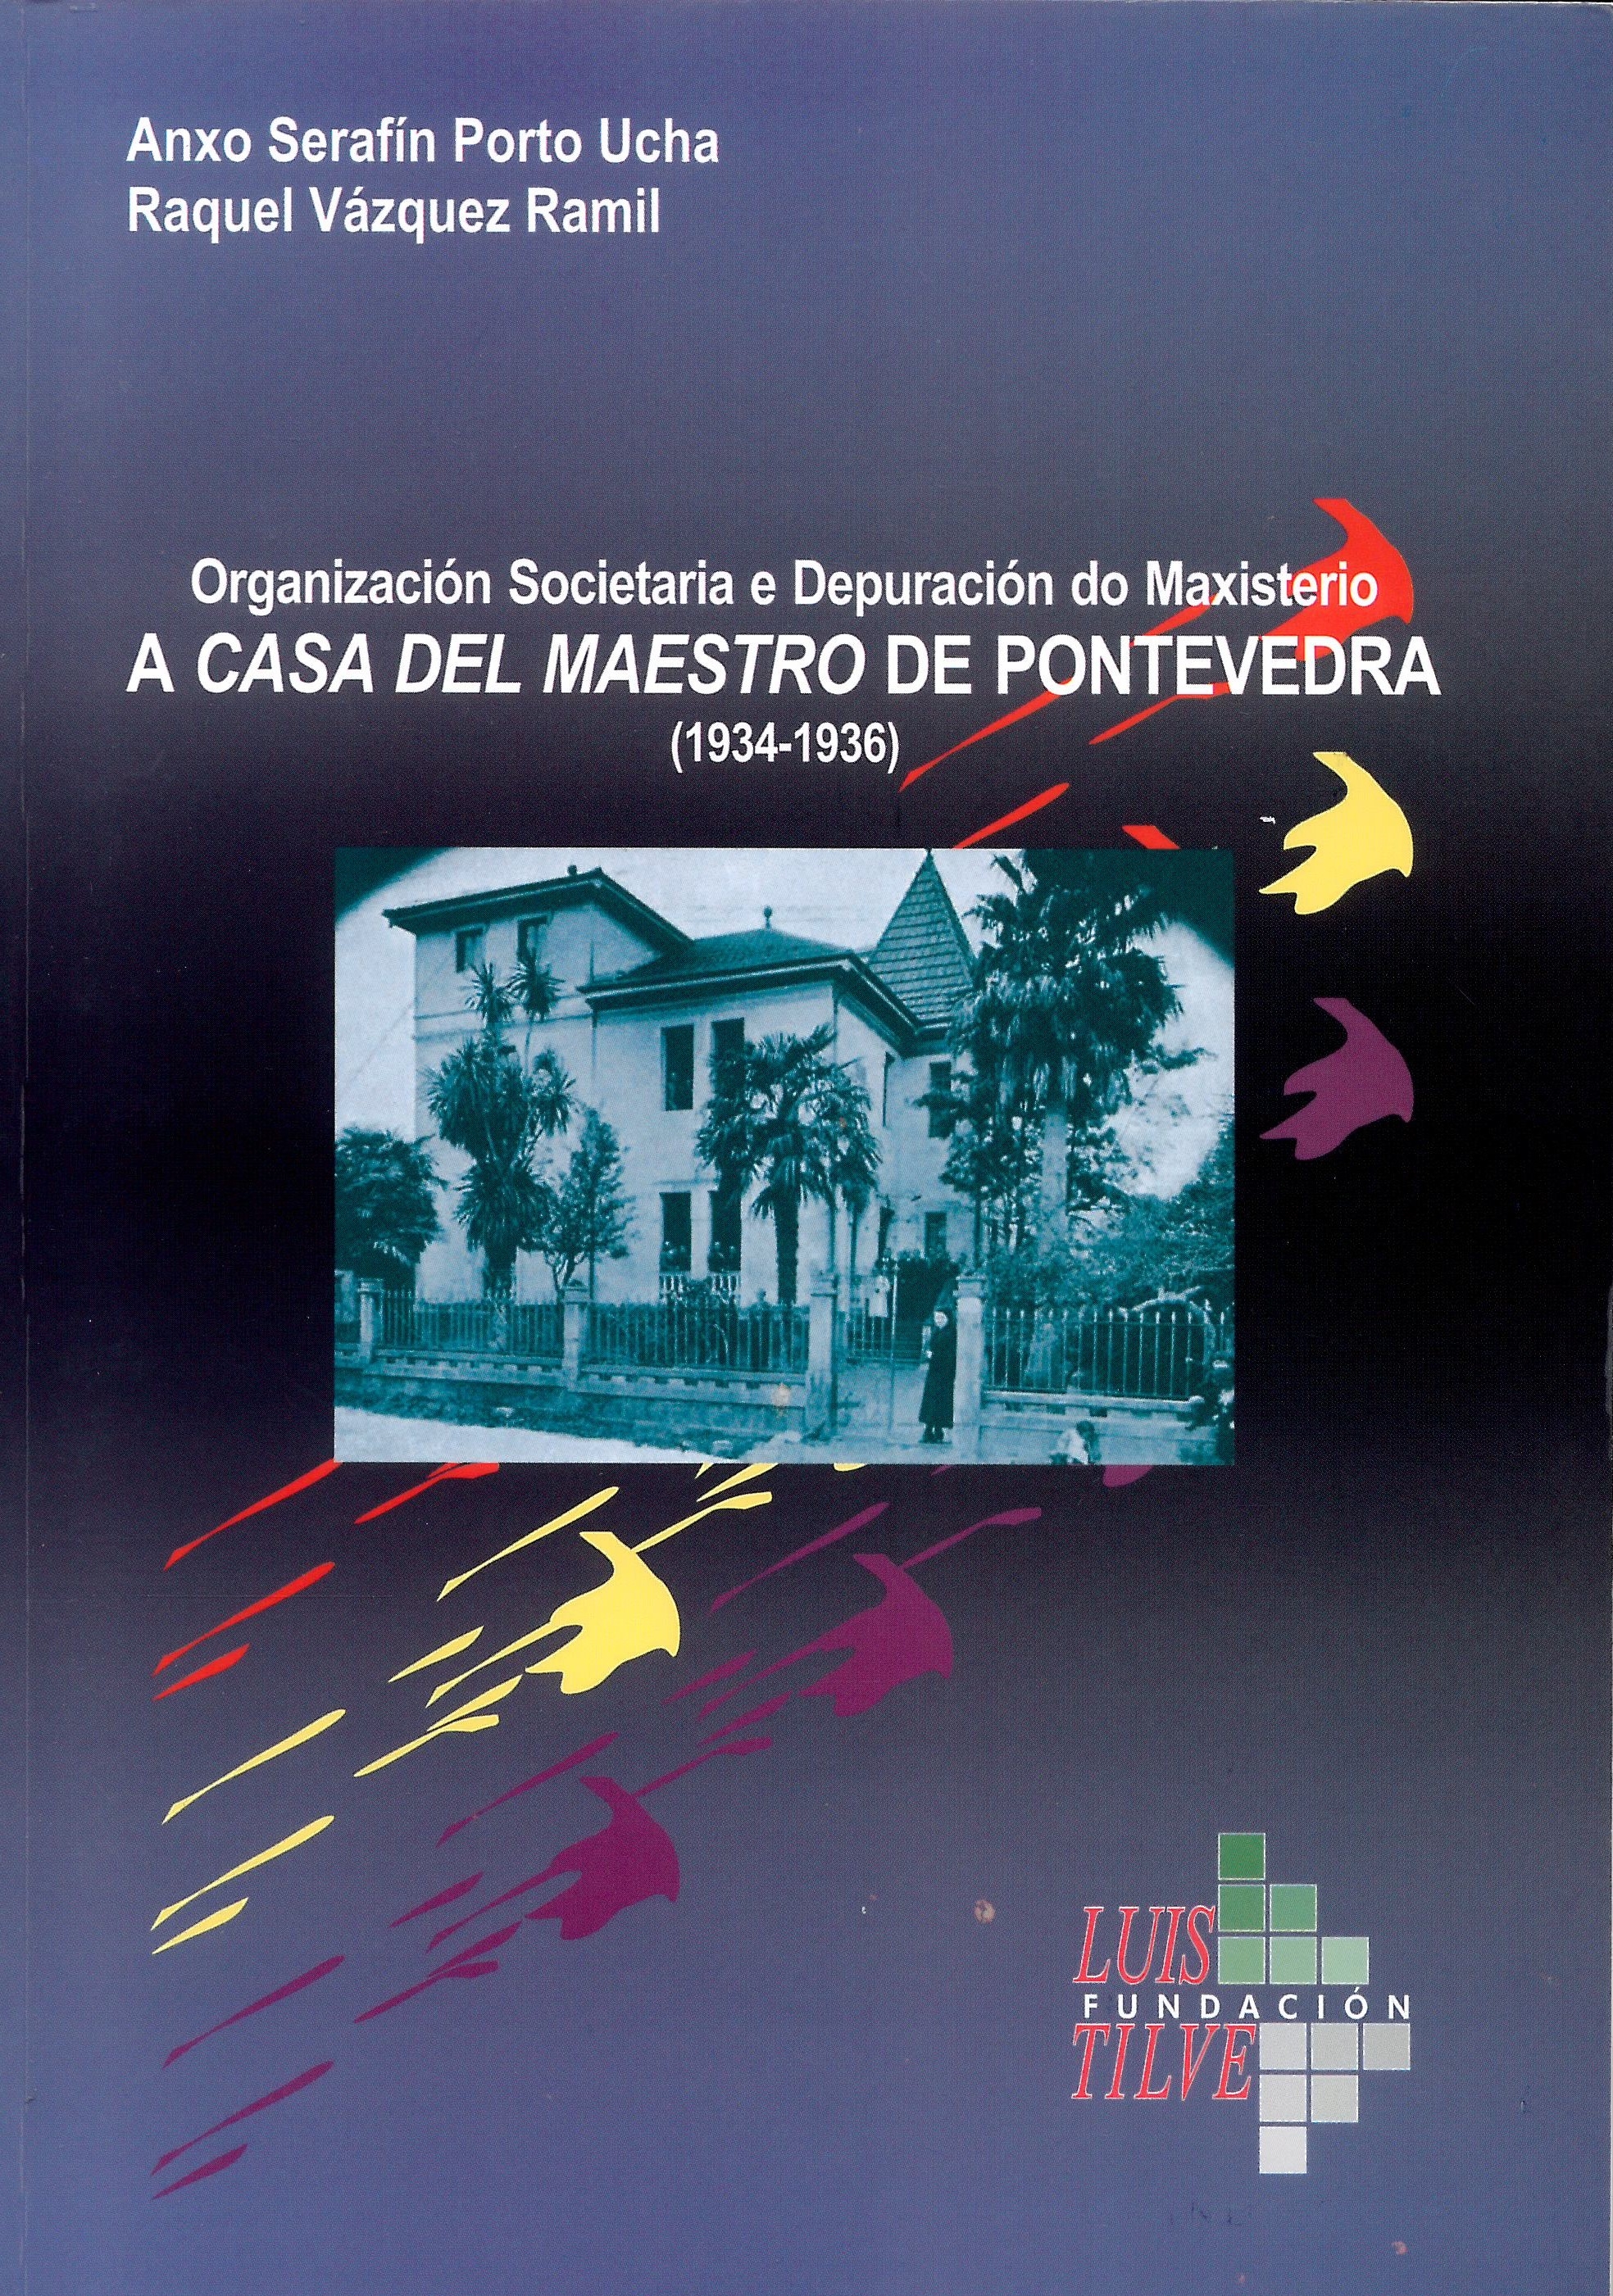 A CASA DEL MAESTRO DE PONTEVEDRA (1934-1936)